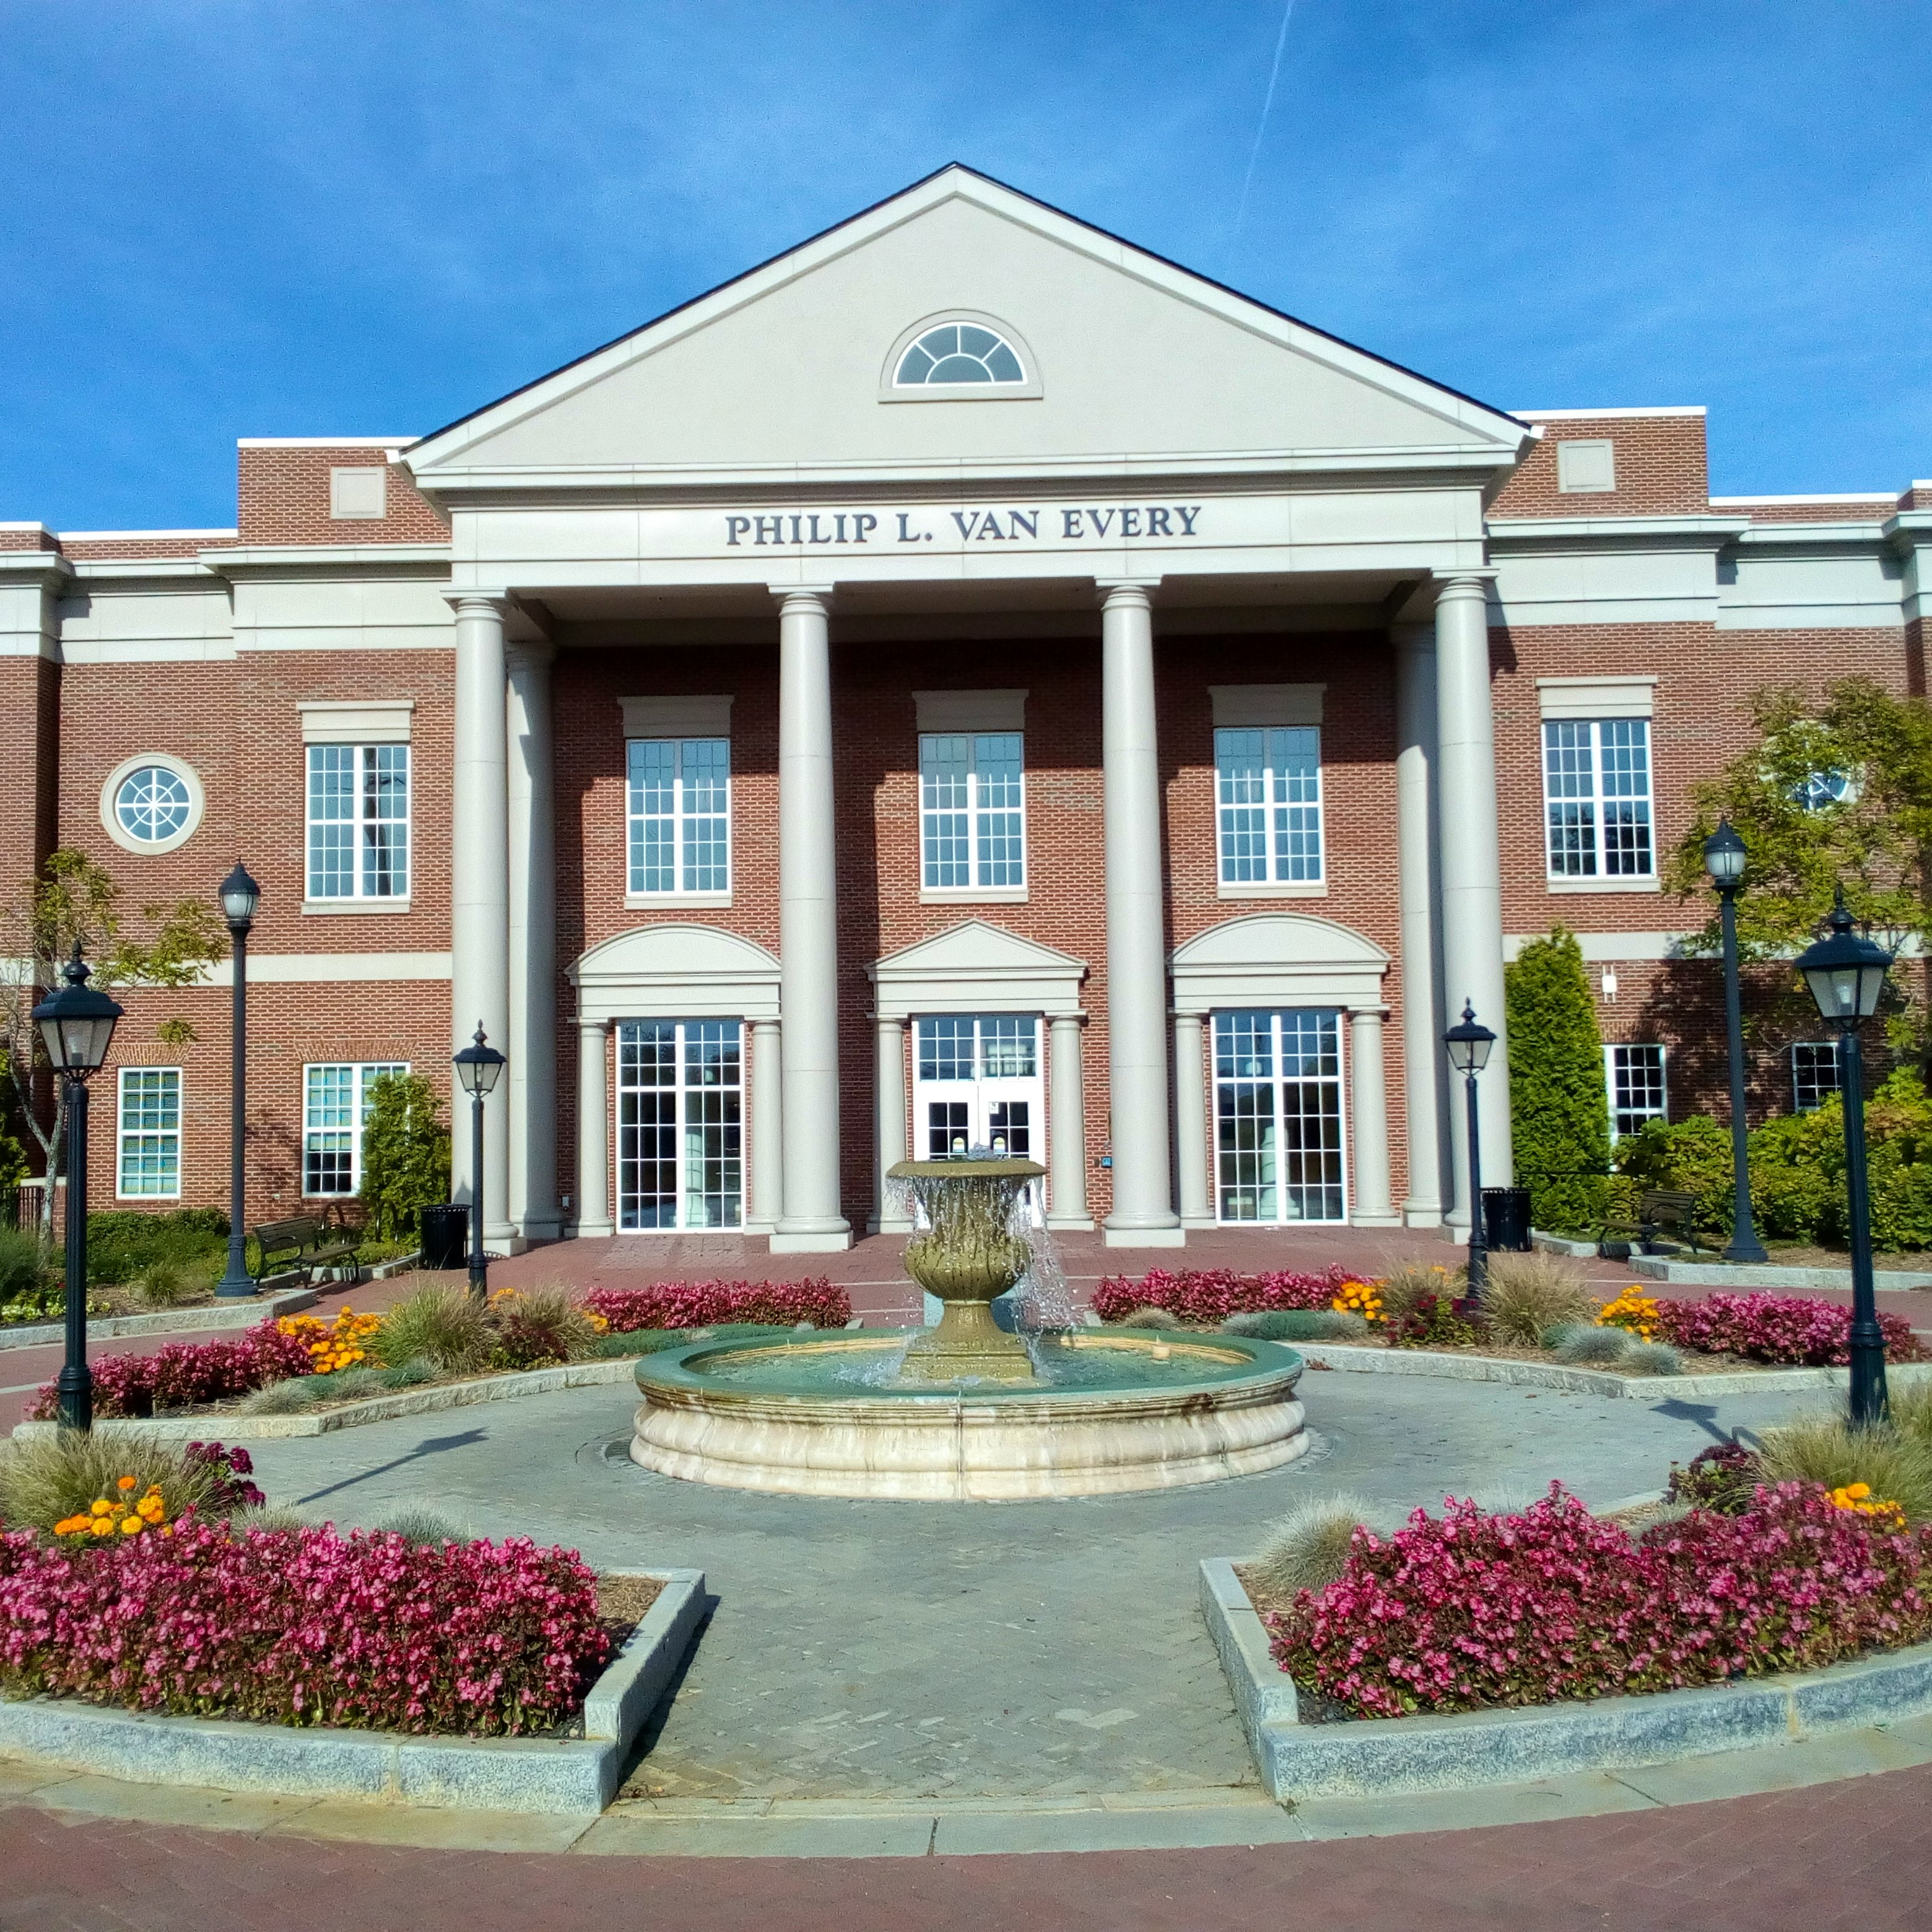 Community Colleges in North Carolina